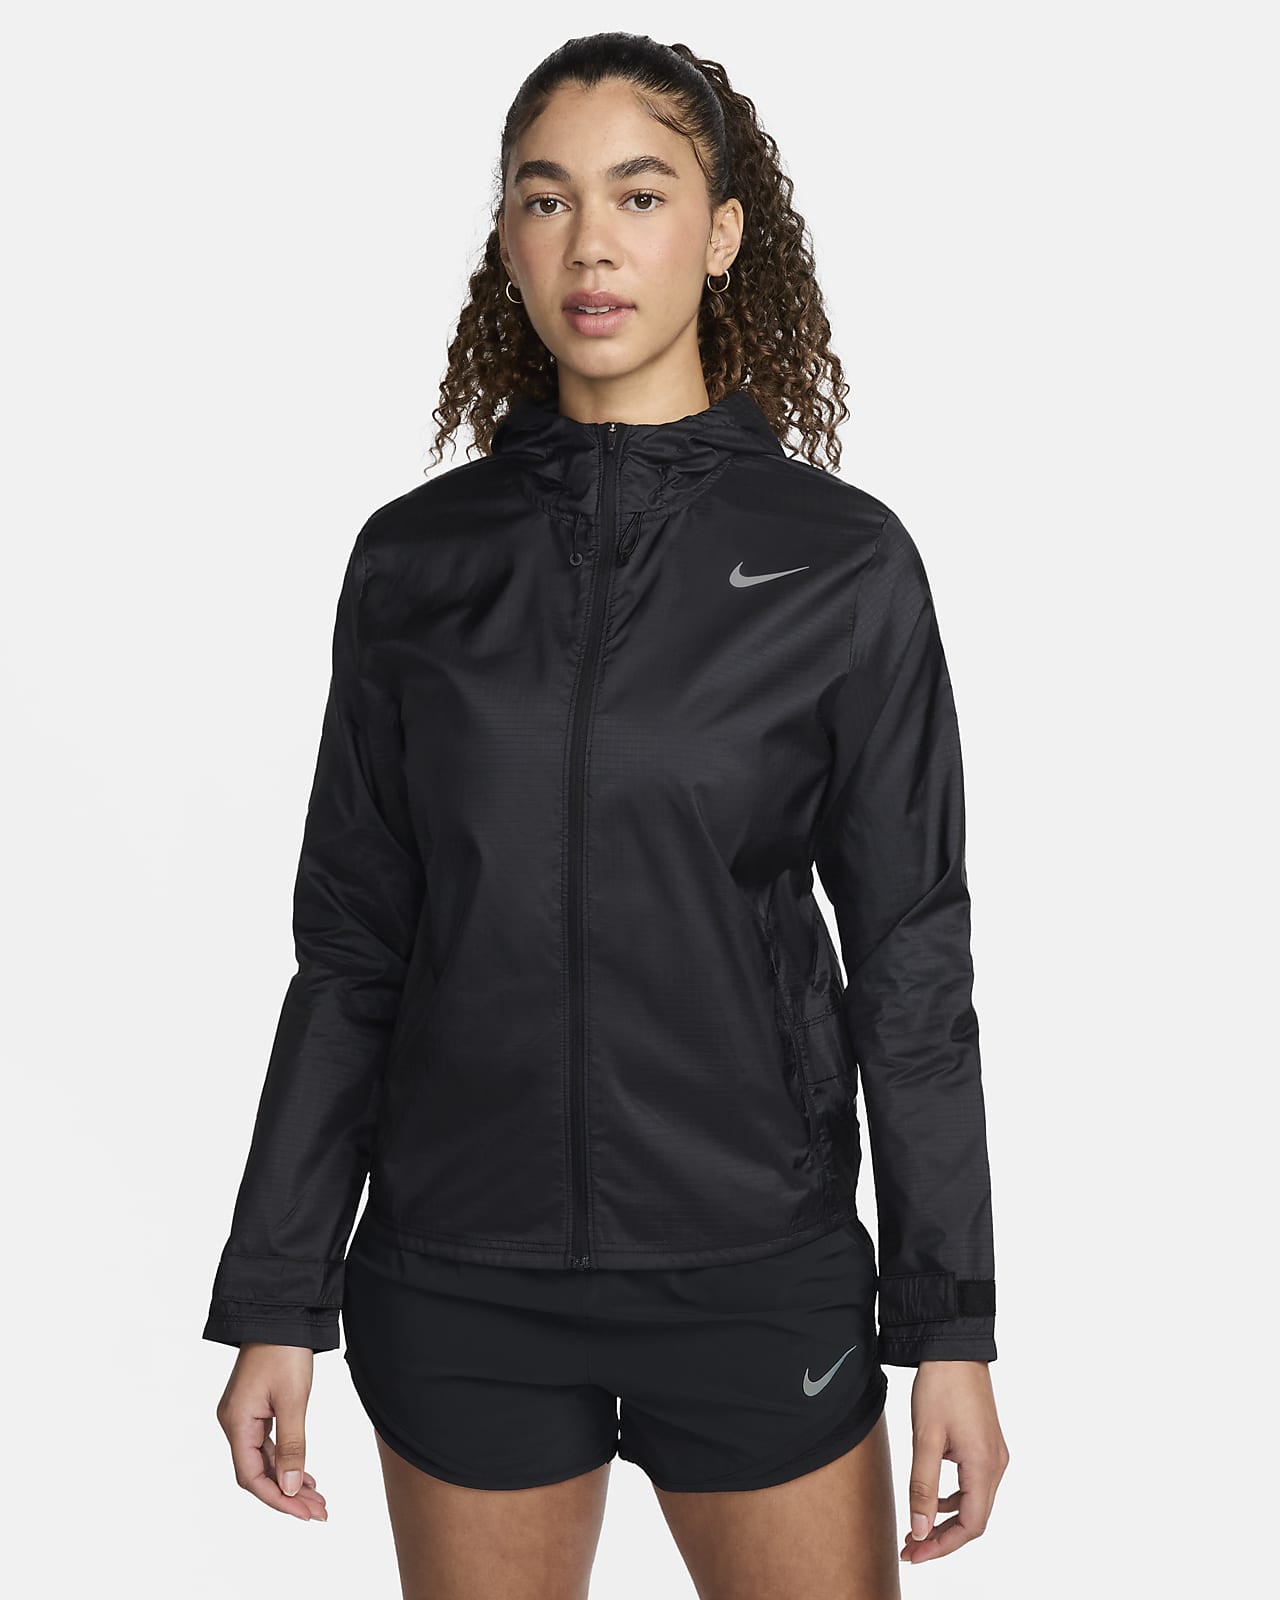 Chamarra de running para mujer Nike Essential